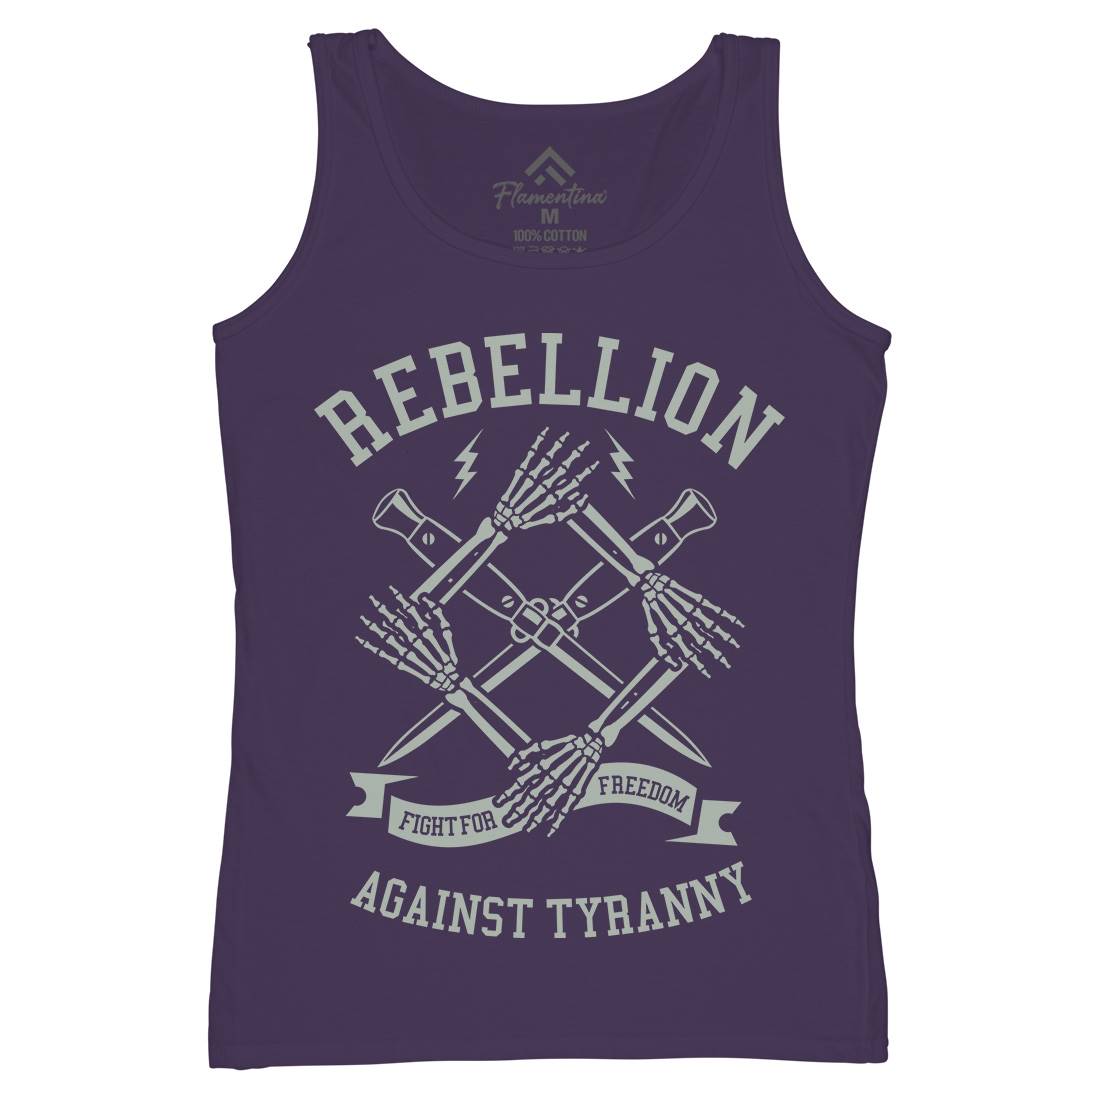 Rebellion Womens Organic Tank Top Vest Illuminati A266